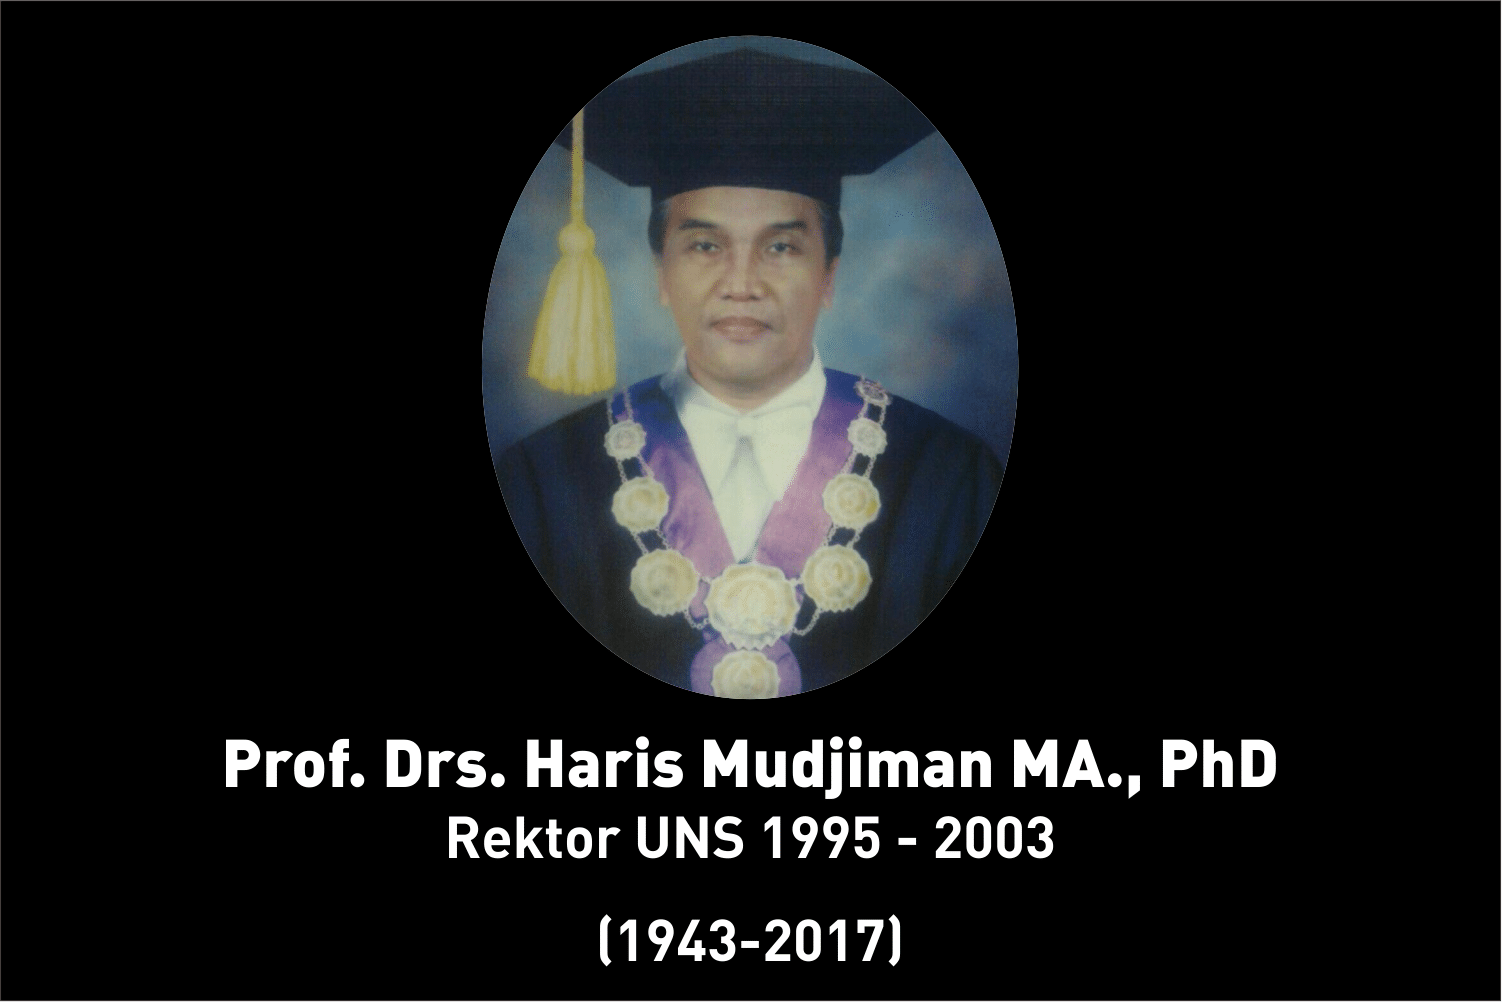 Rektor ke-5 UNS periode 1995-2003 Prof. Drs. Haris Mudjiman, M.A., Ph.D